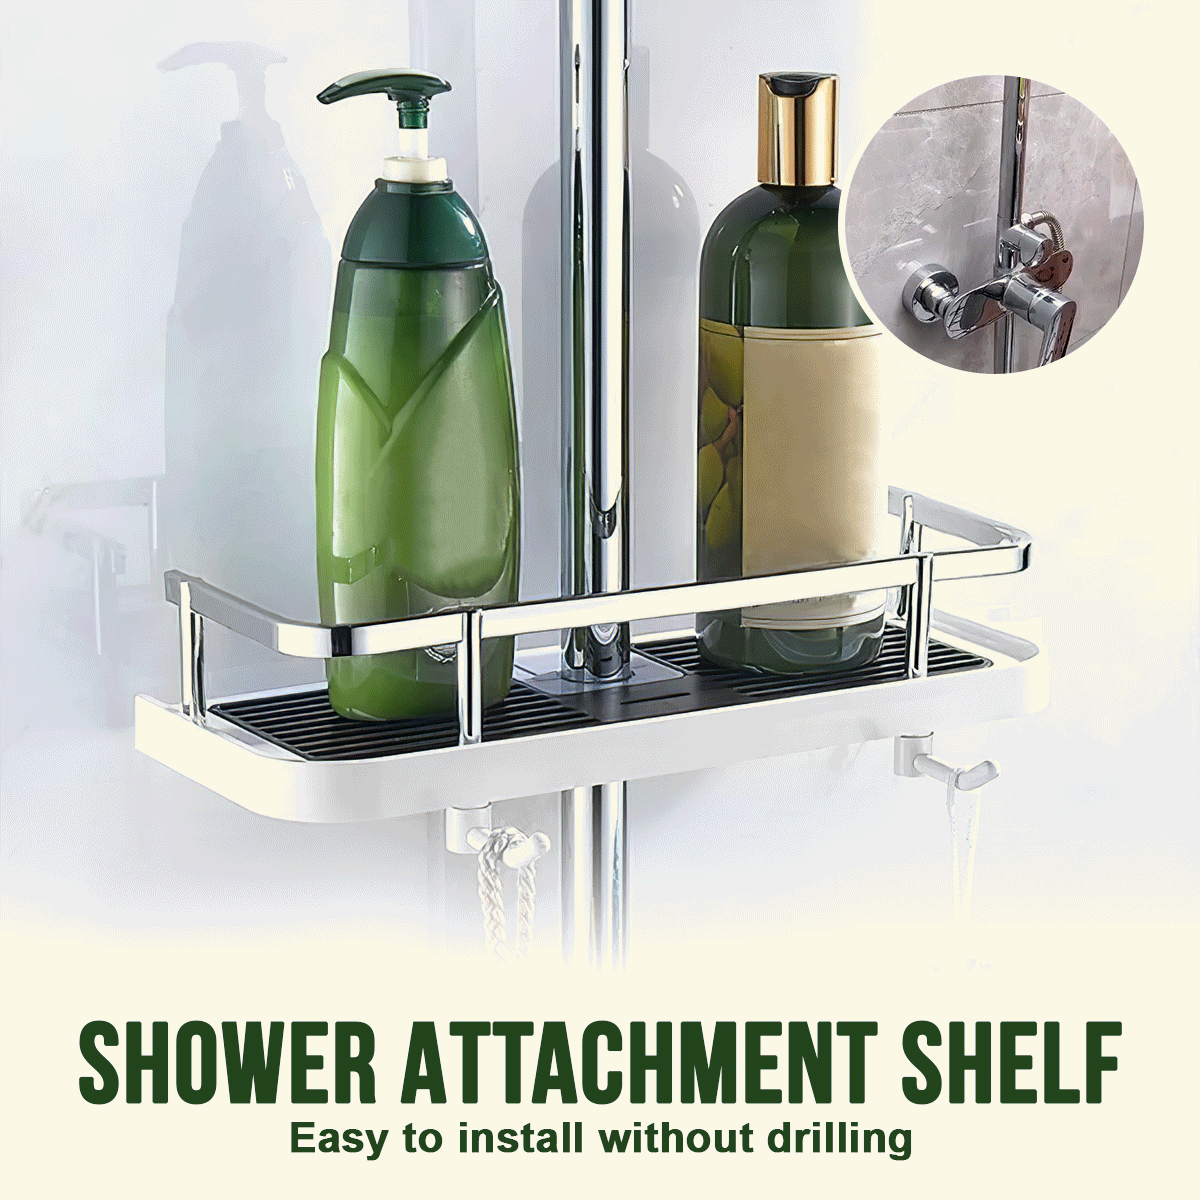 Shower Attachment Shelf